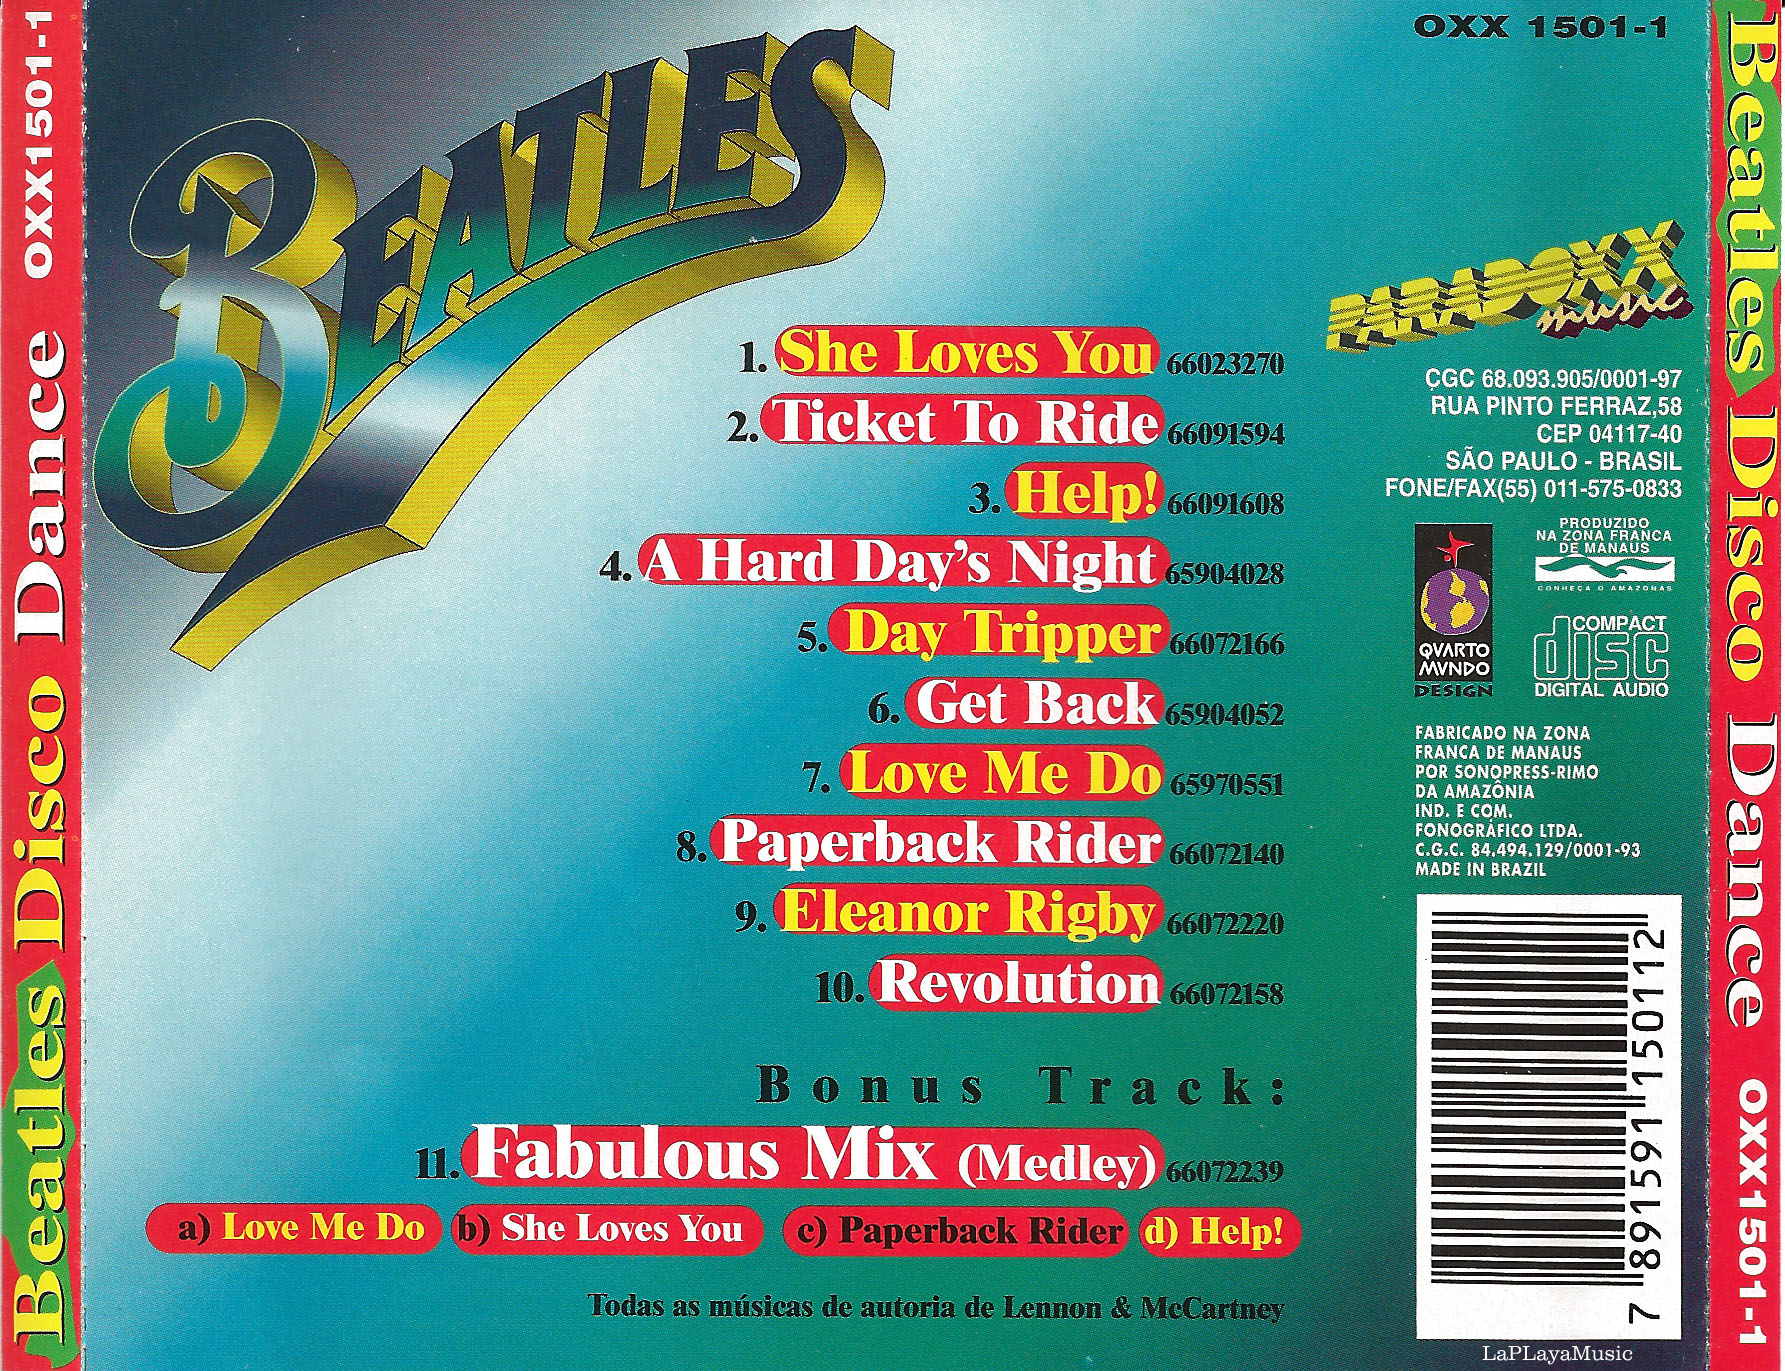 ≥ Queen dance traxx 1 cd. €2,50 — Cd's